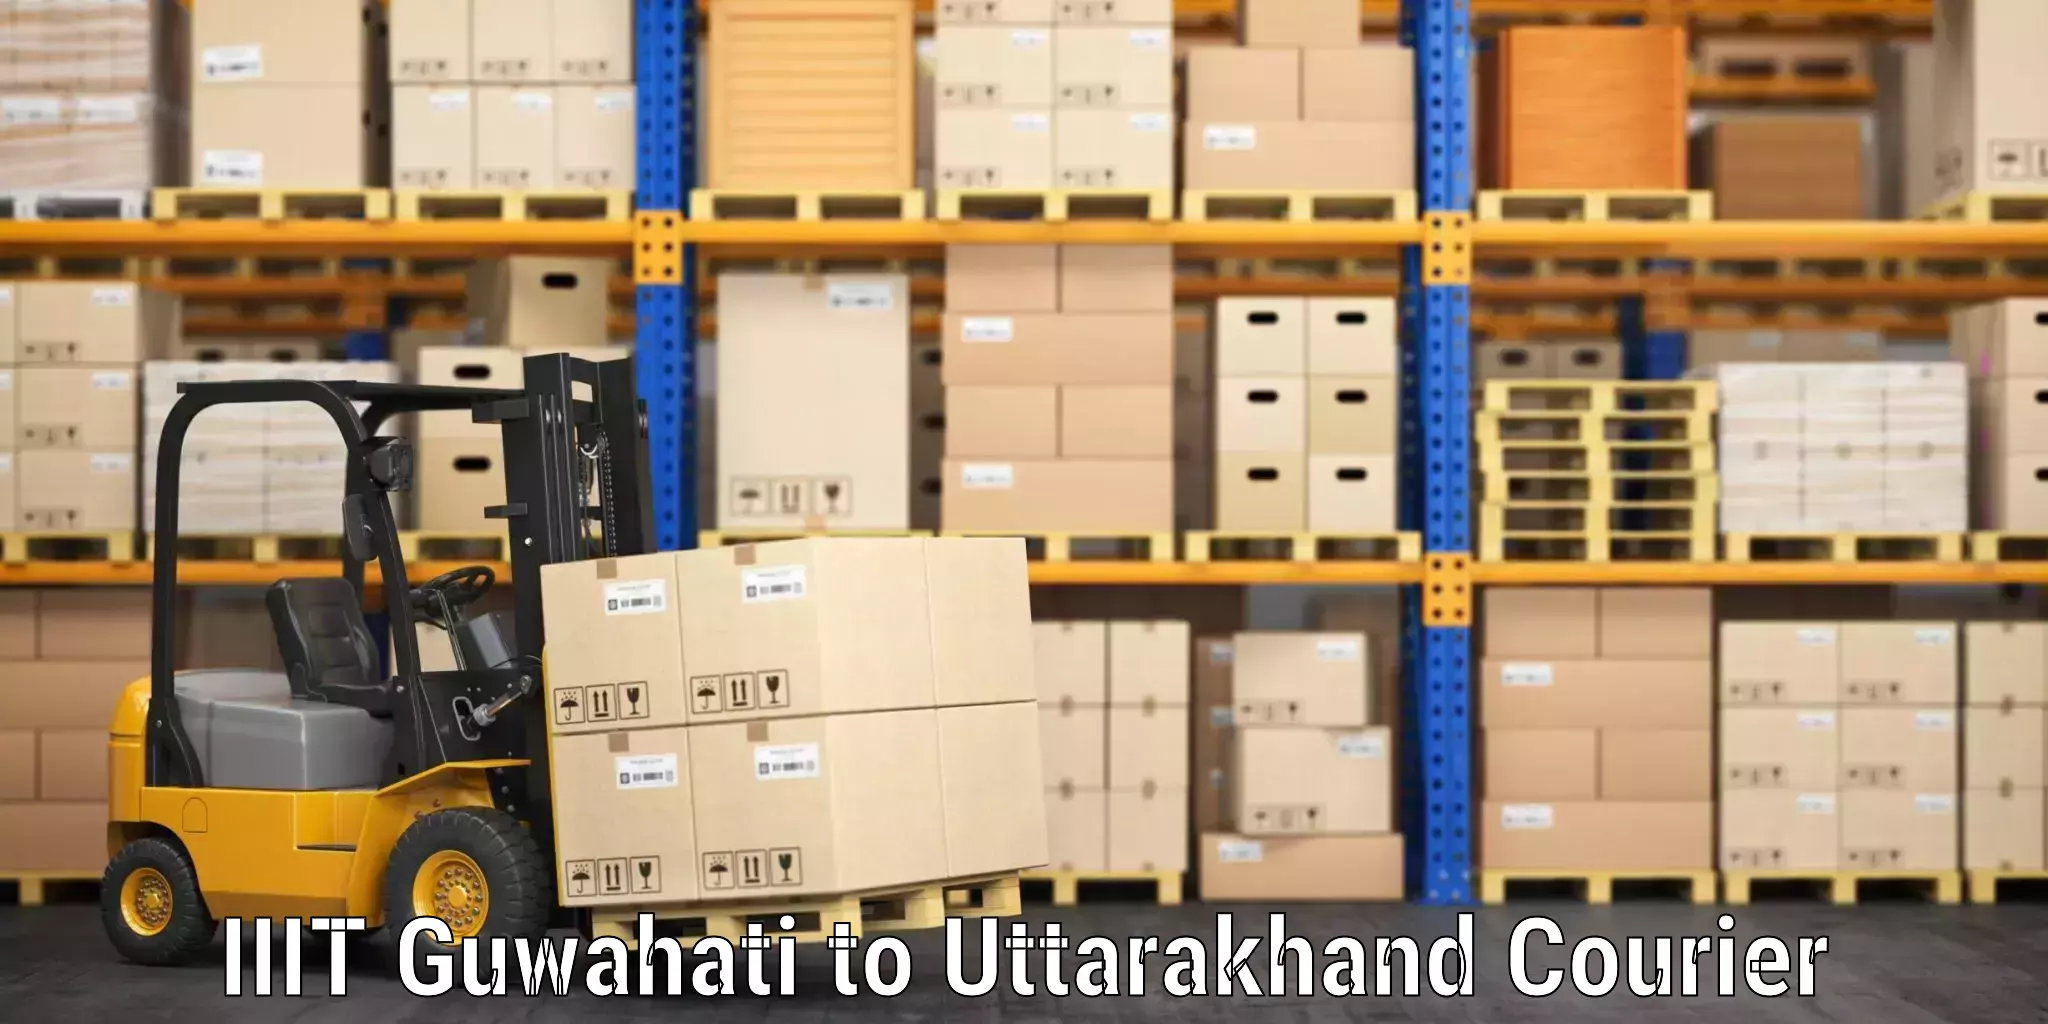 Luggage transport company IIIT Guwahati to Uttarakhand